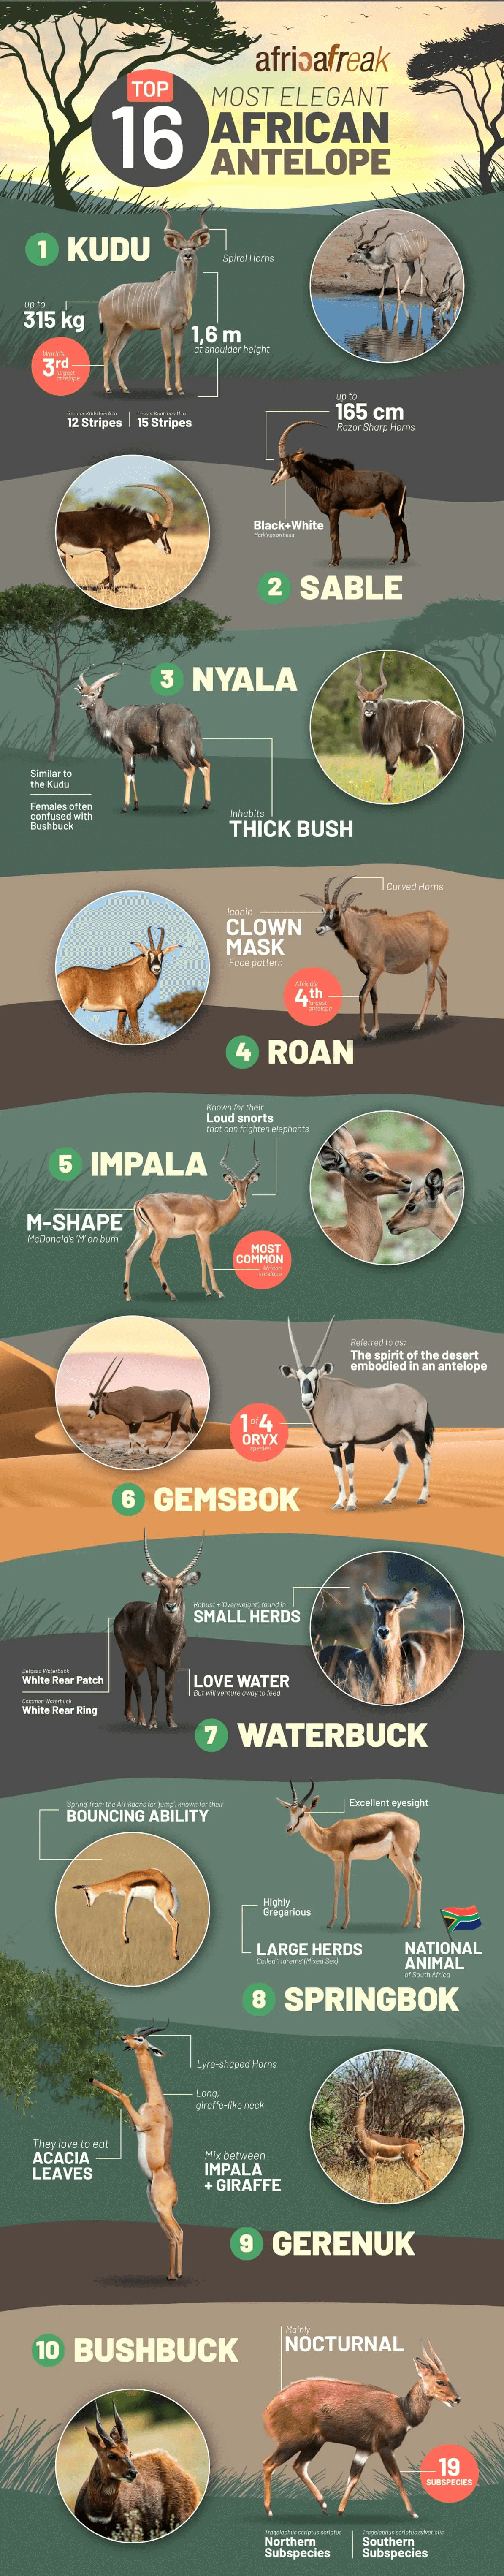 Most elegant African antelope